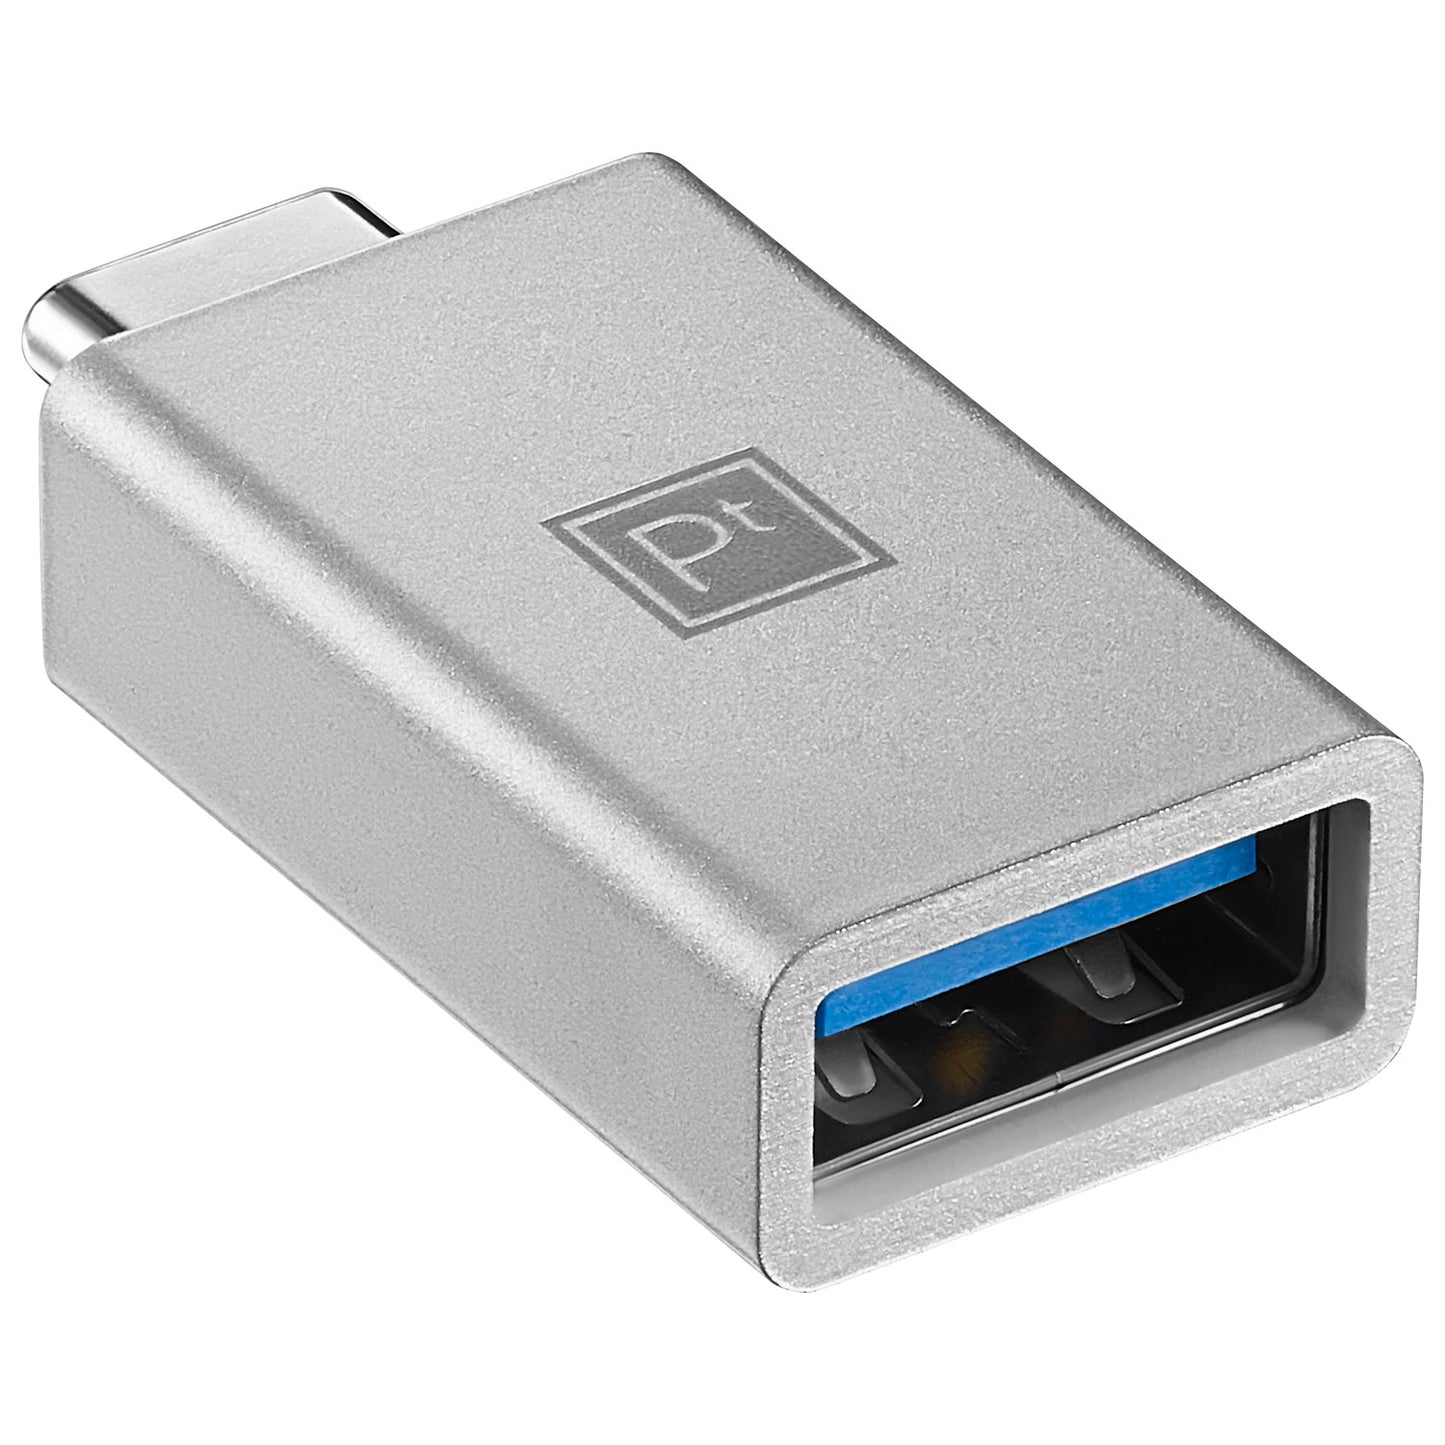 Platinum PT-PACAC USB-C to USB-A Adapter Grey - Open Box